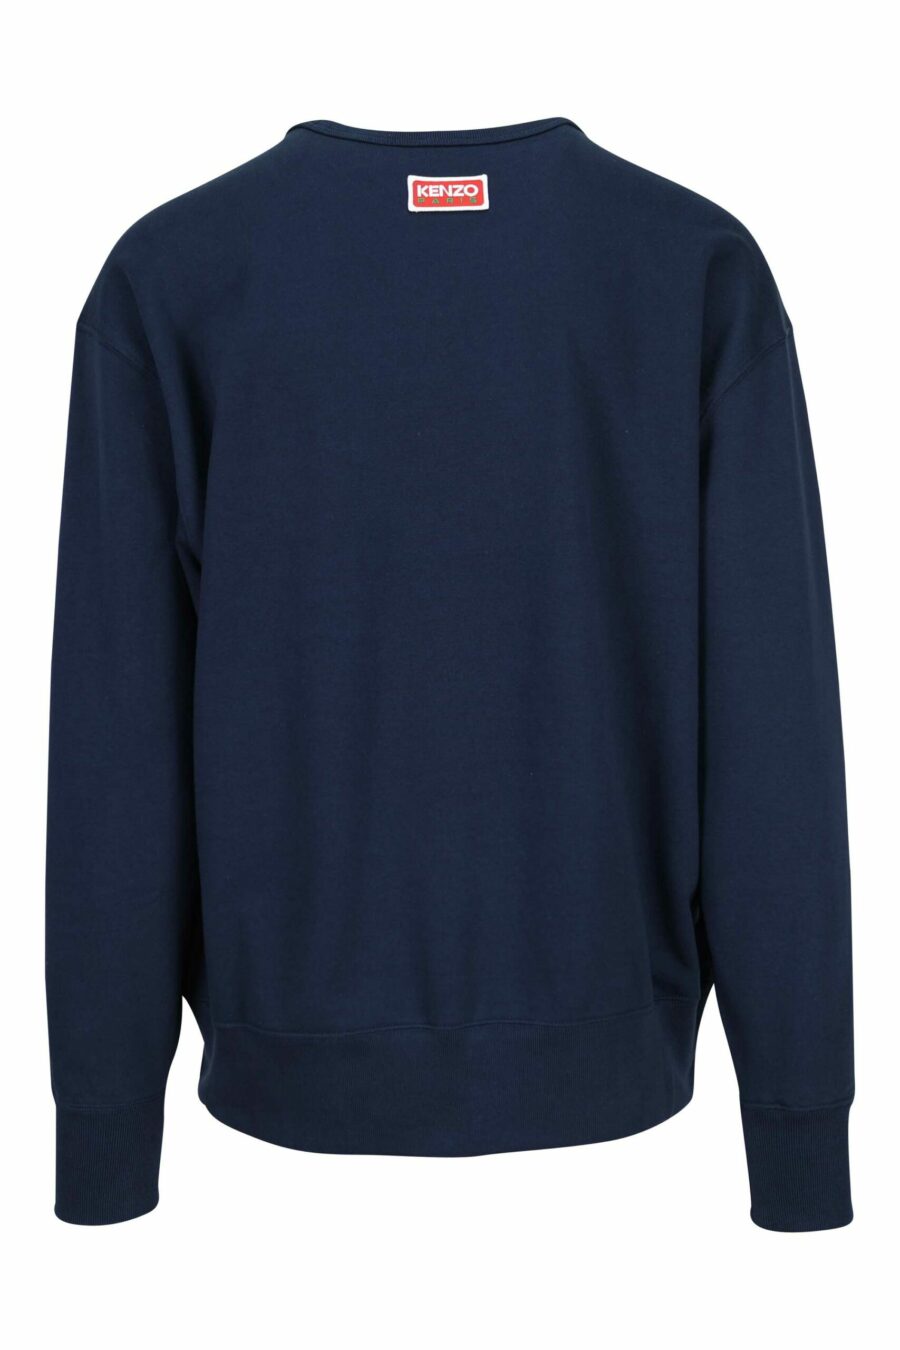 Oversize dark blue sweatshirt with tiger maxilogue - 3612230629783 1 scaled